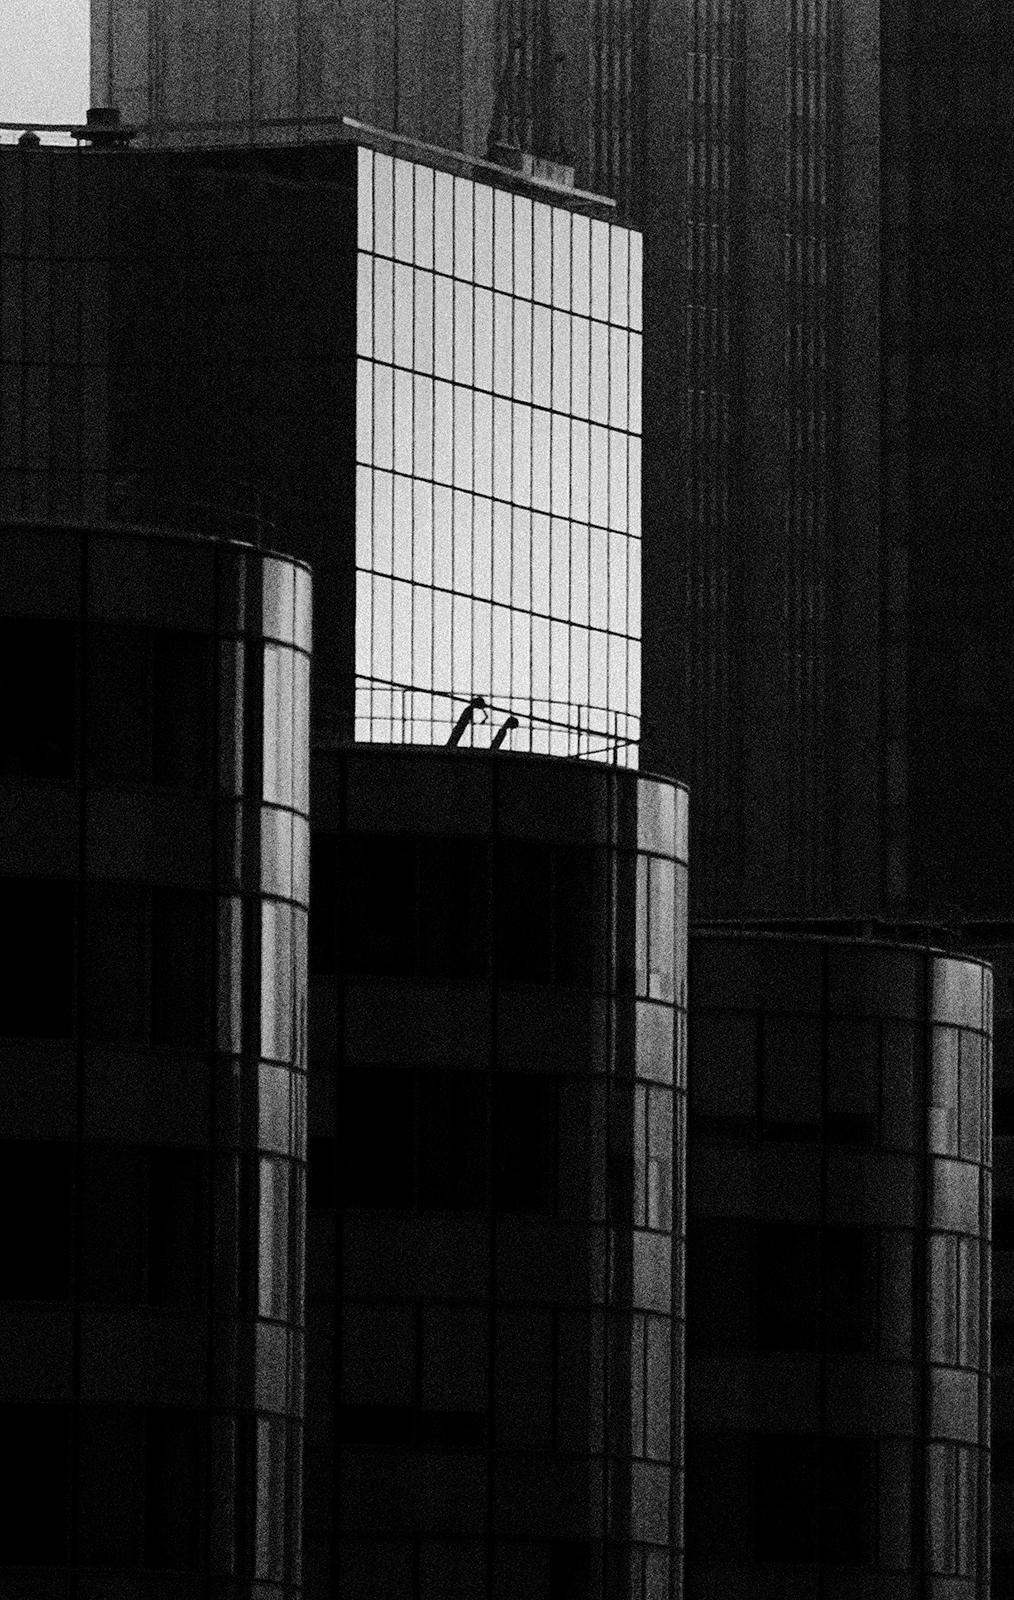 La Défense 1- Signed limited edition Architectural print, Black white photo - Photograph by Ian Sanderson